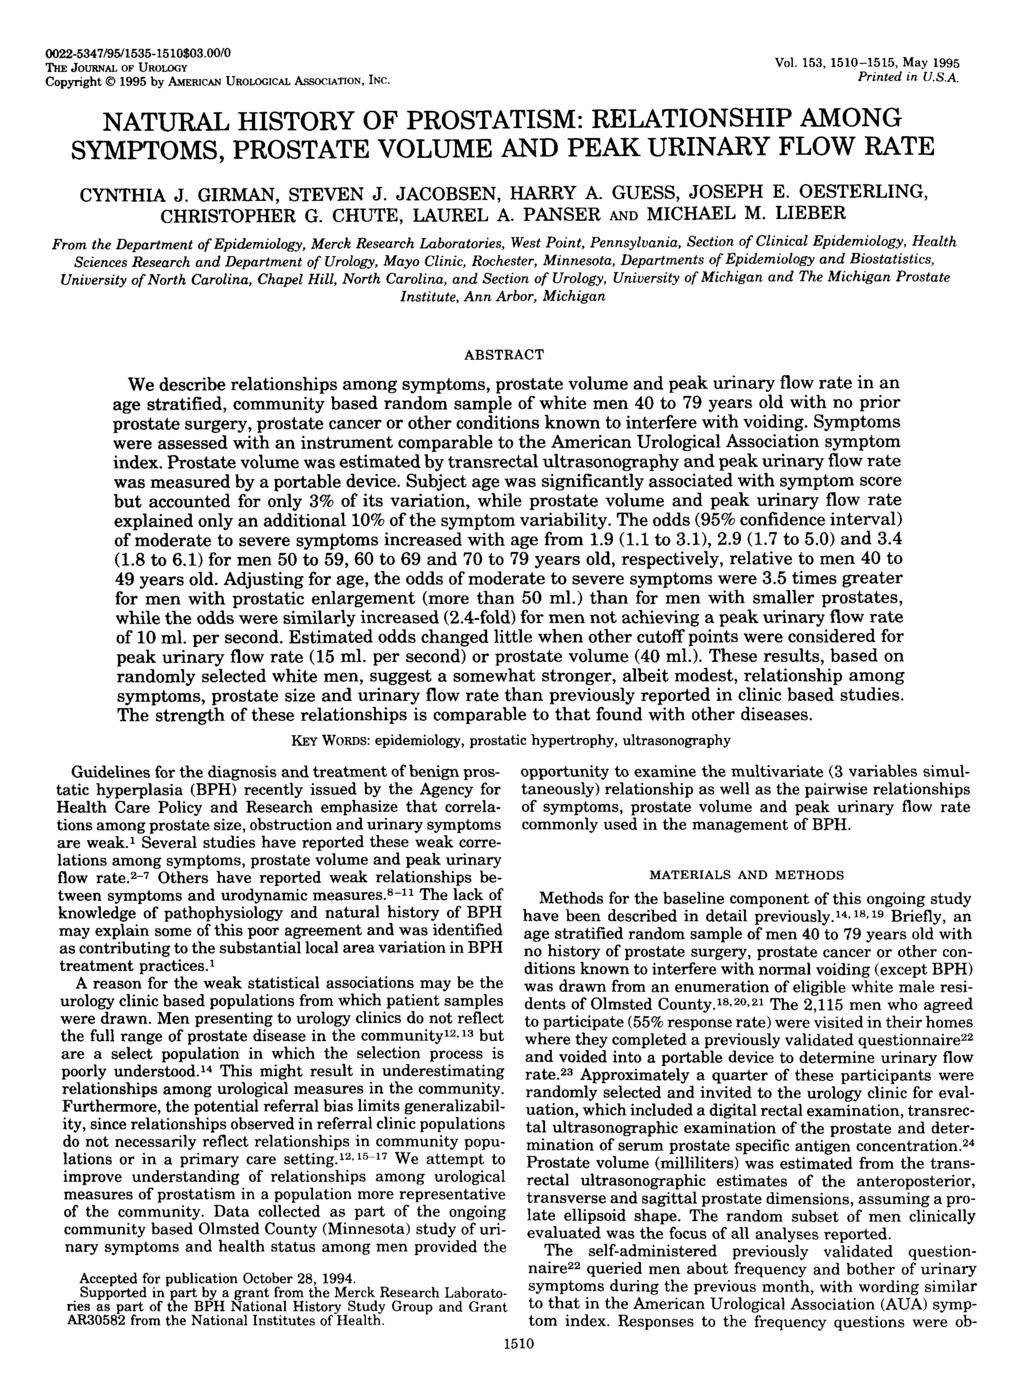 Vol 155.595-600. February 1996 Prrnfed 111 U.S.A. NATURAL HISTORY OF PROSTATISM: LONGITUDINAL CHANGES IN VOIDING SYMPTOMS IN COMMUNITY DWELLING MEN STEVEN J. JACOBSEN," CYNTHIA J. GIRMAN, HARRY A.